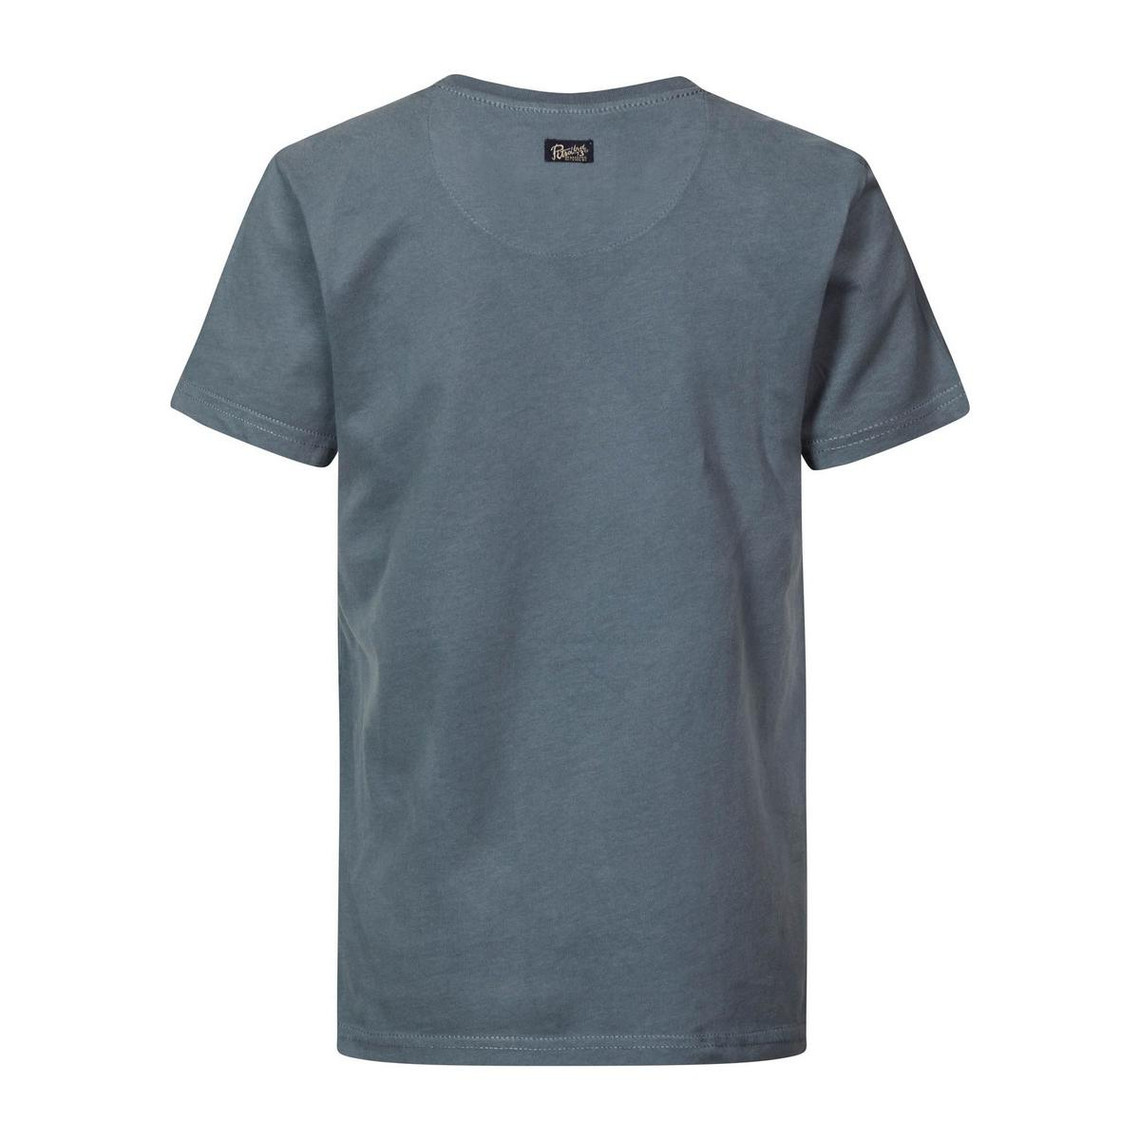 tee-shirt manches courtes garçon gris-bleu gris foncé en coton